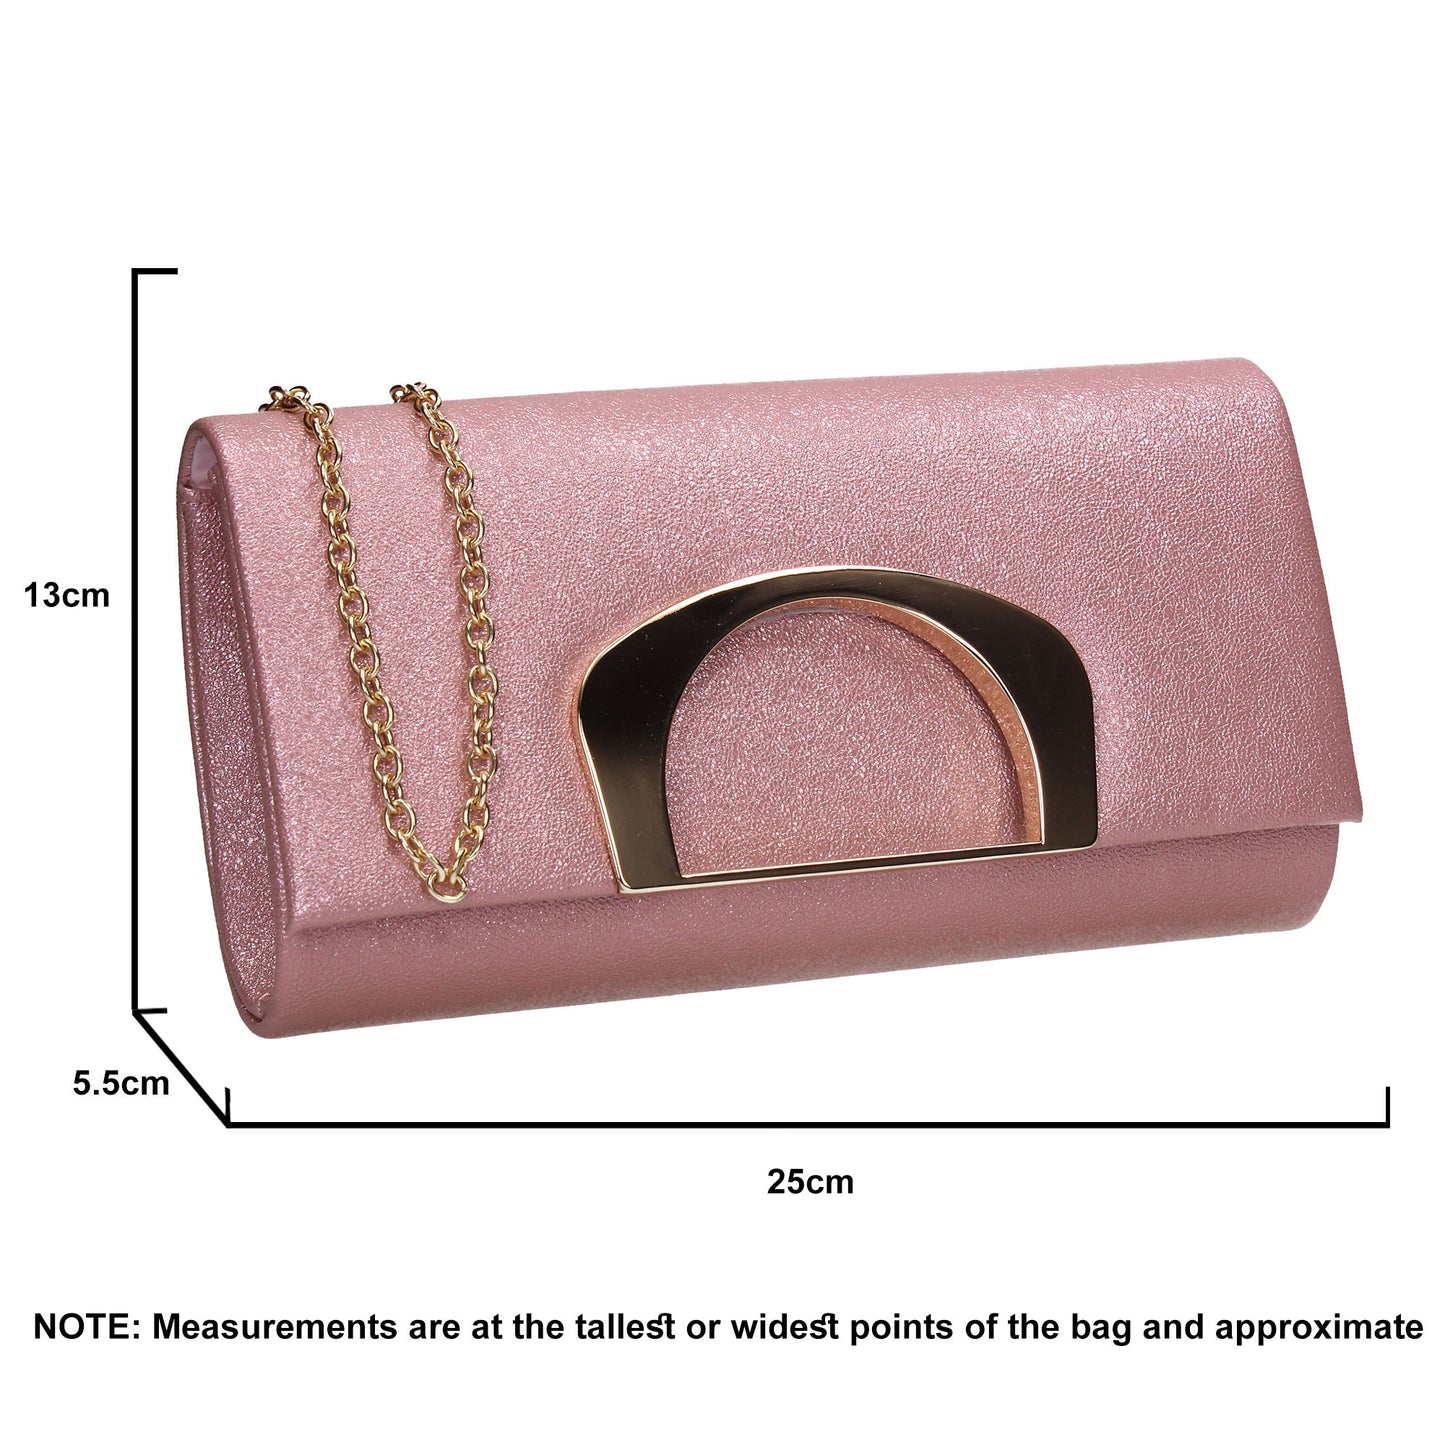 SWANKYSWANS Marcie Clutch Bag Pink Cute Cheap Clutch Bag For Weddings School and Work